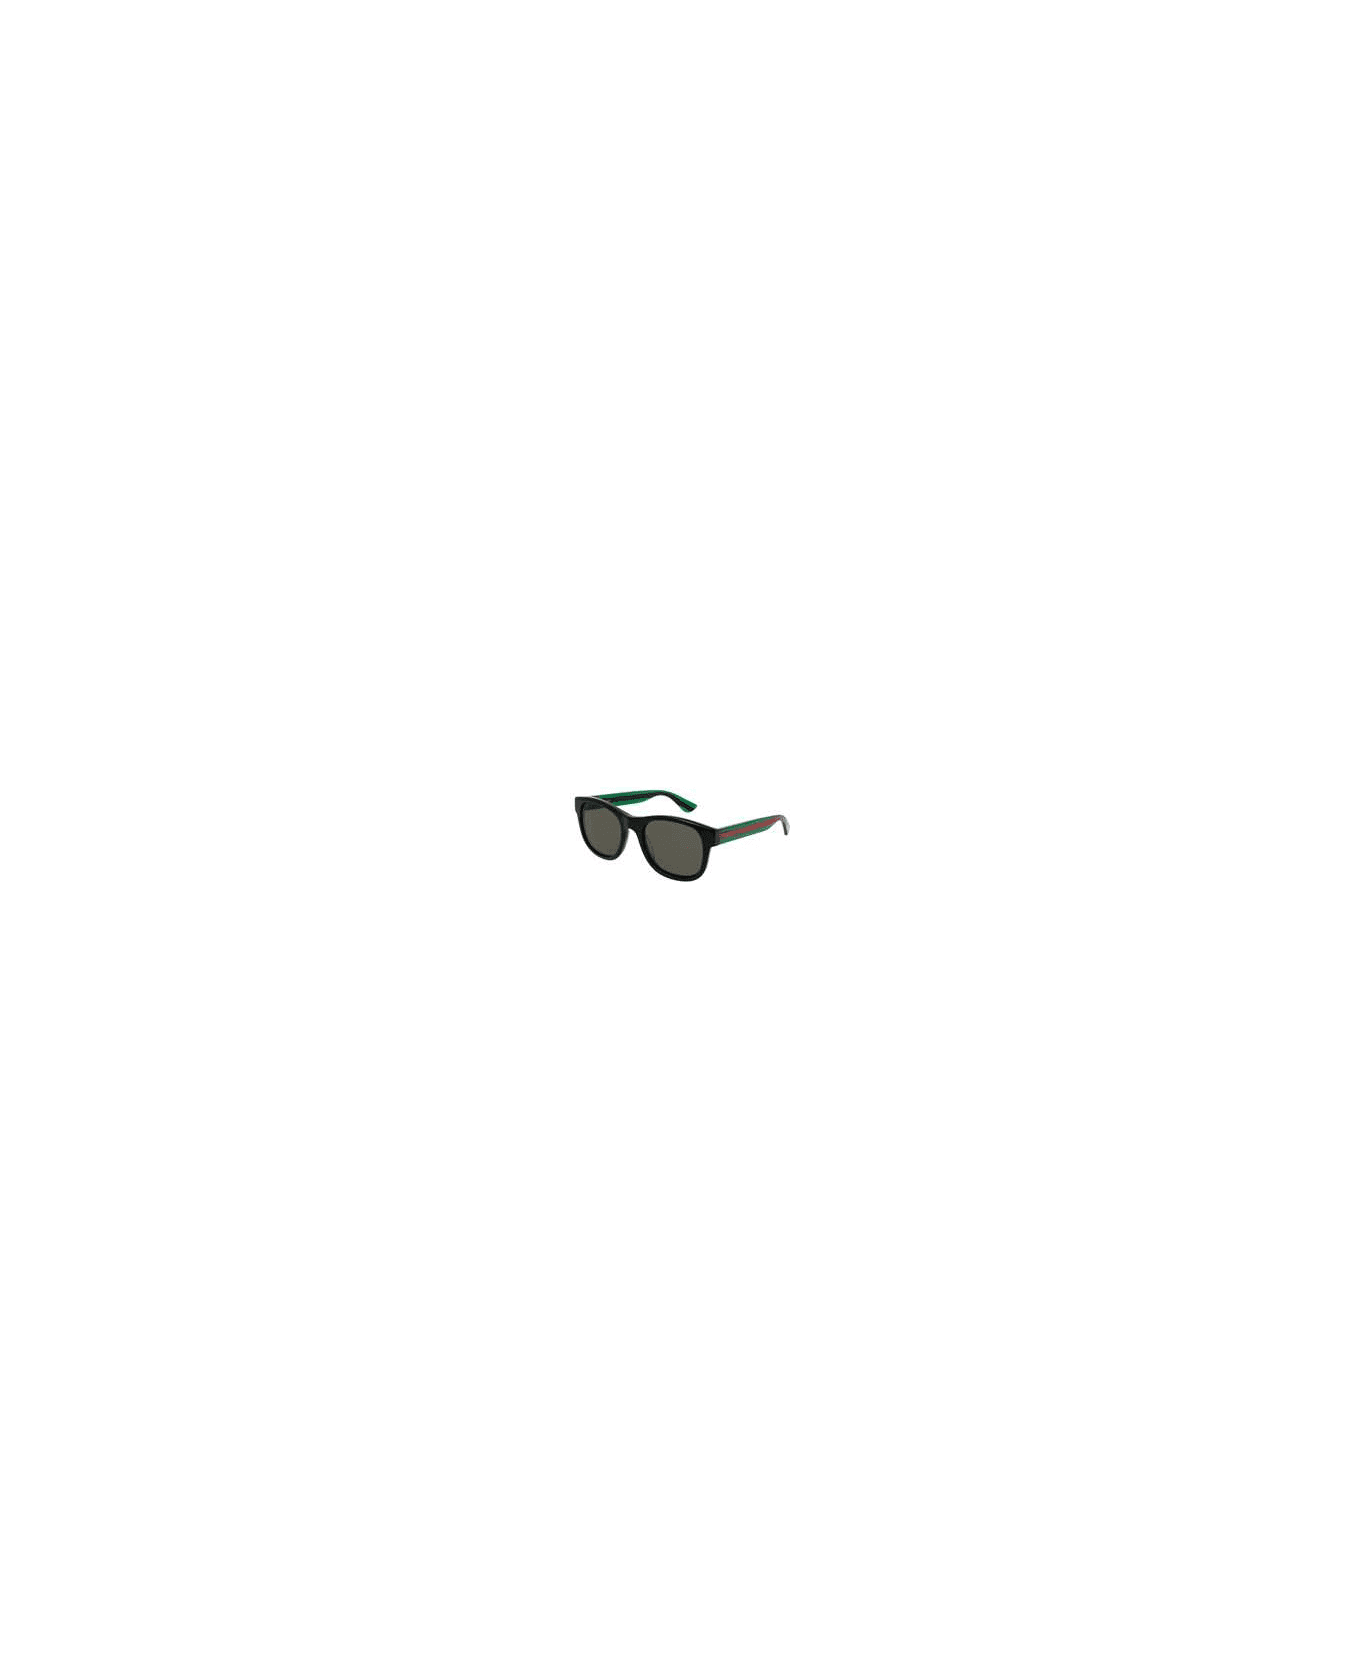 Gucci Eyewear GG0003SN Sunglasses - Black Green Green